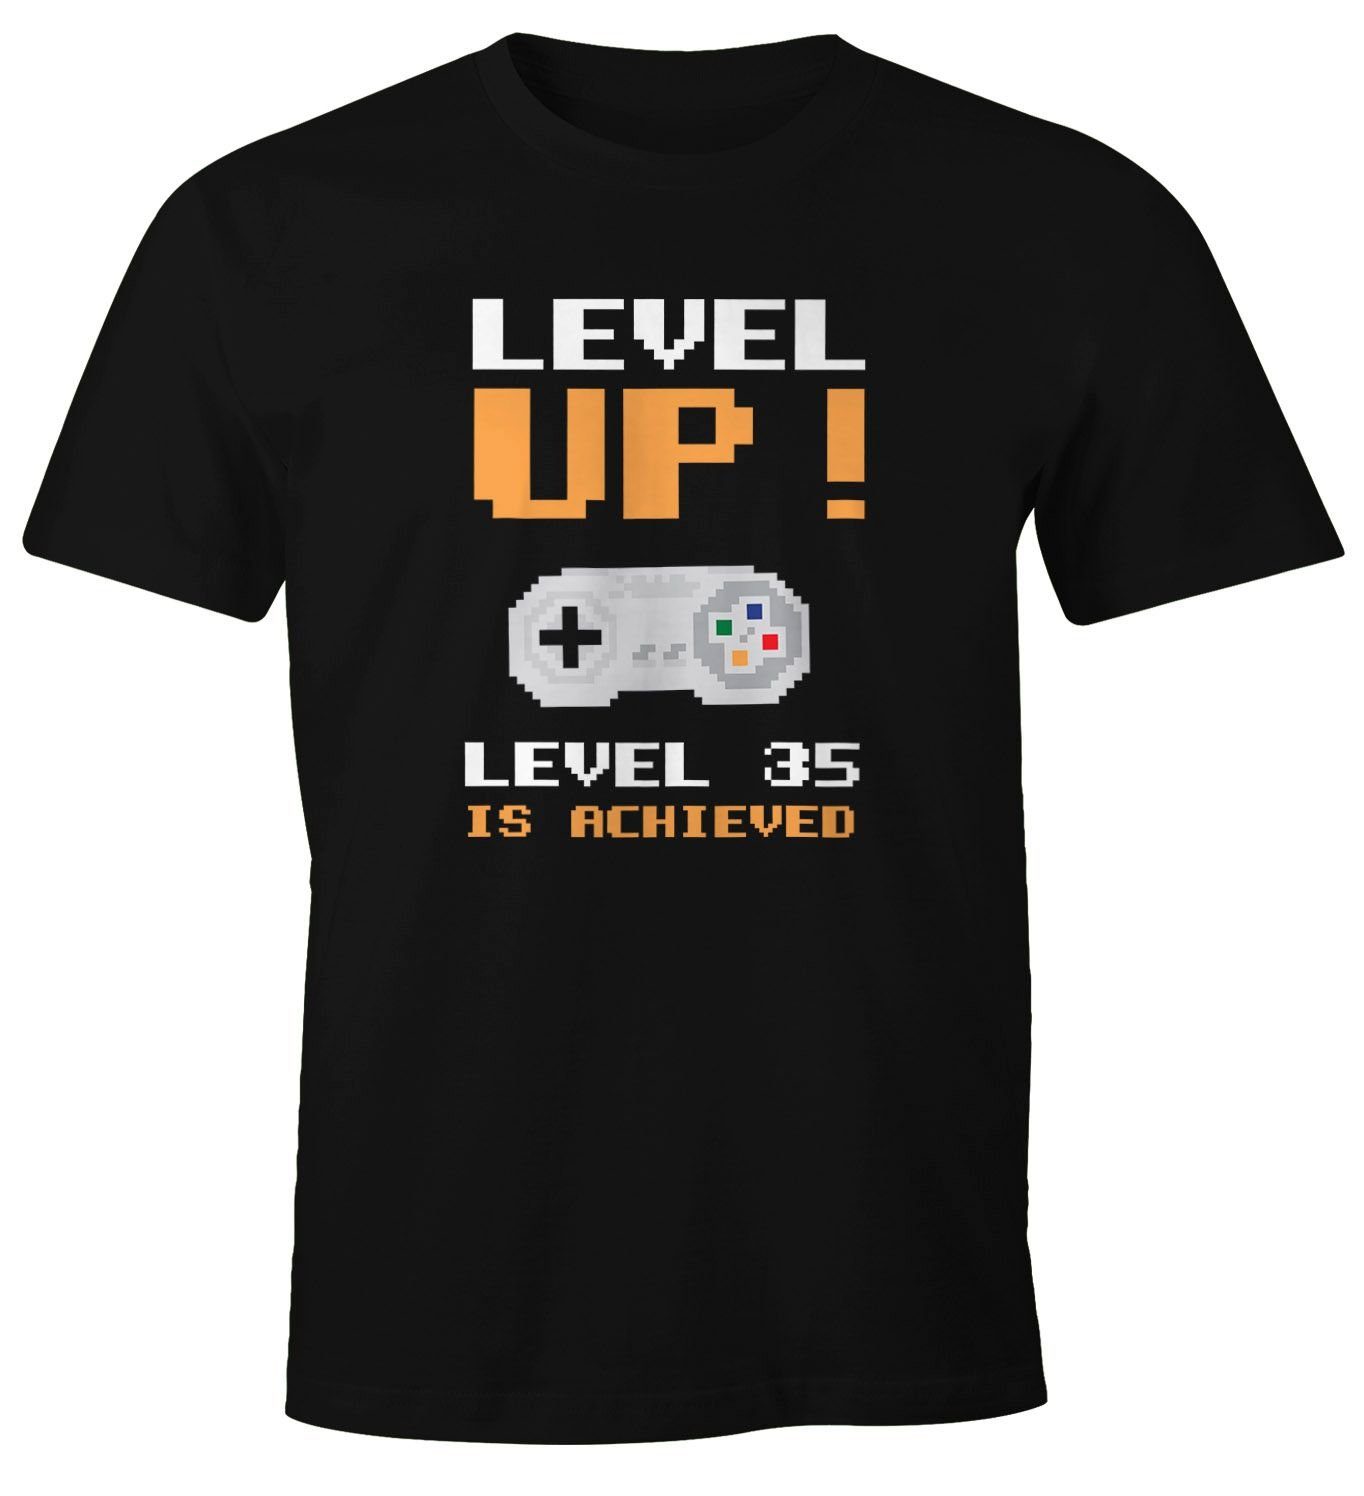 MoonWorks Print-Shirt Herren T-Shirt Geburtstag Level Up Pixel Controller Retro Gamer Pixelgrafik Geschenk Arcade Fun-Shirt Moonworks® mit Print 35 schwarz